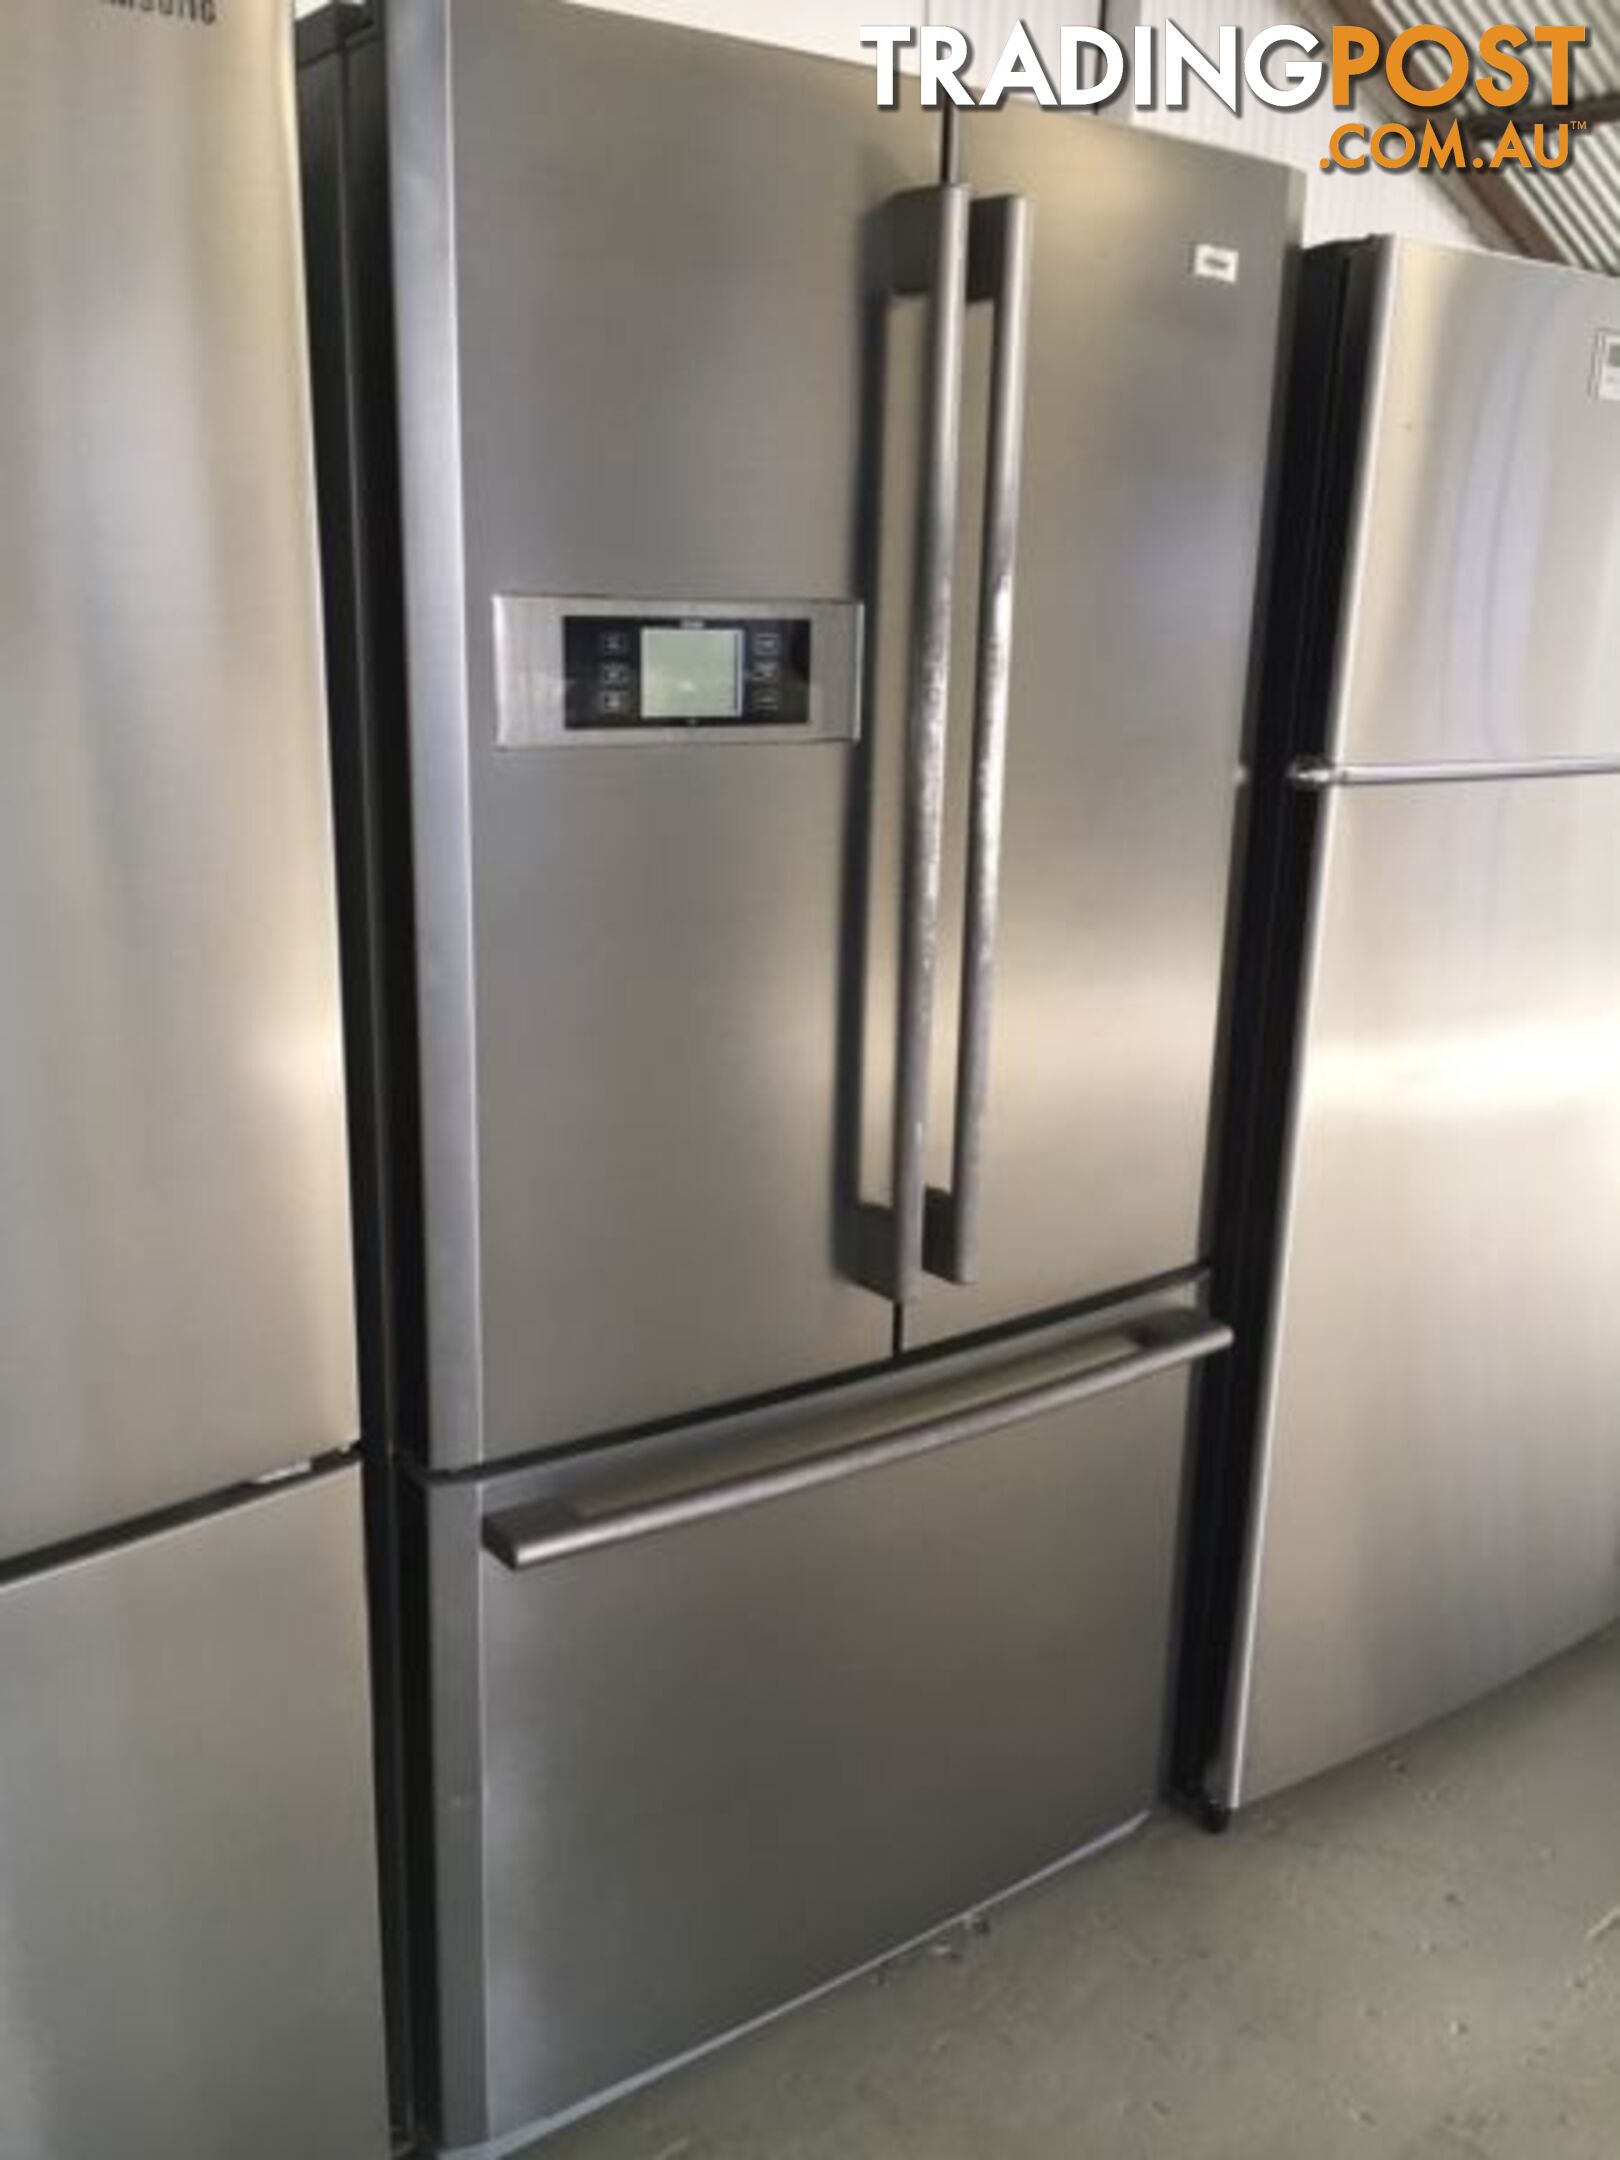 647l Haier French door fridge freezer DELIVERY WARRANTY